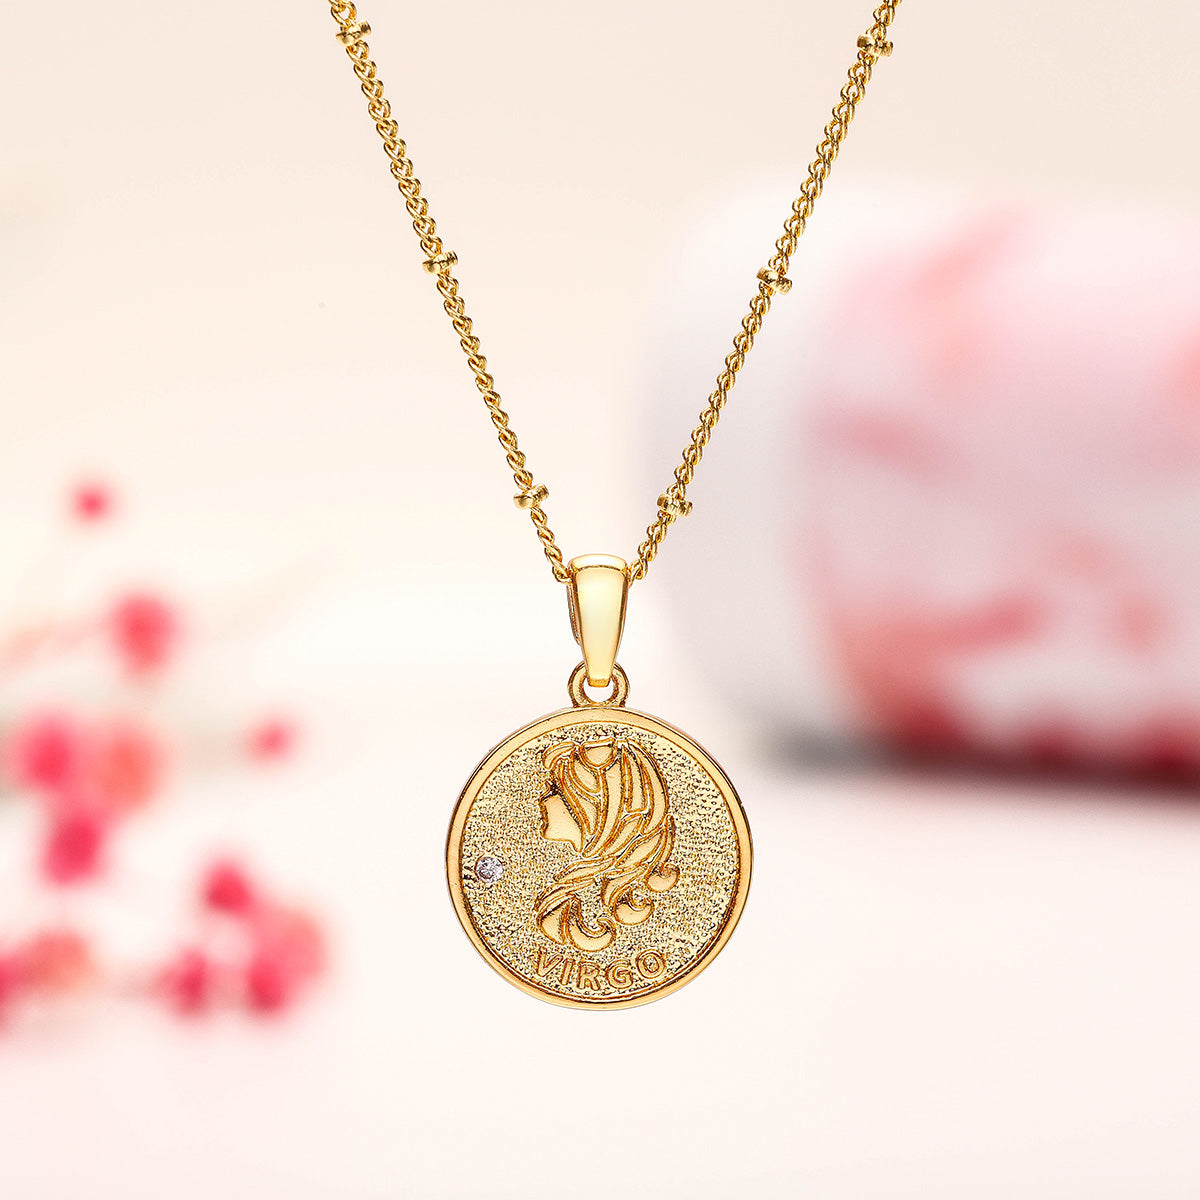 Virgo Constellation Coin Pendant Brass Necklace